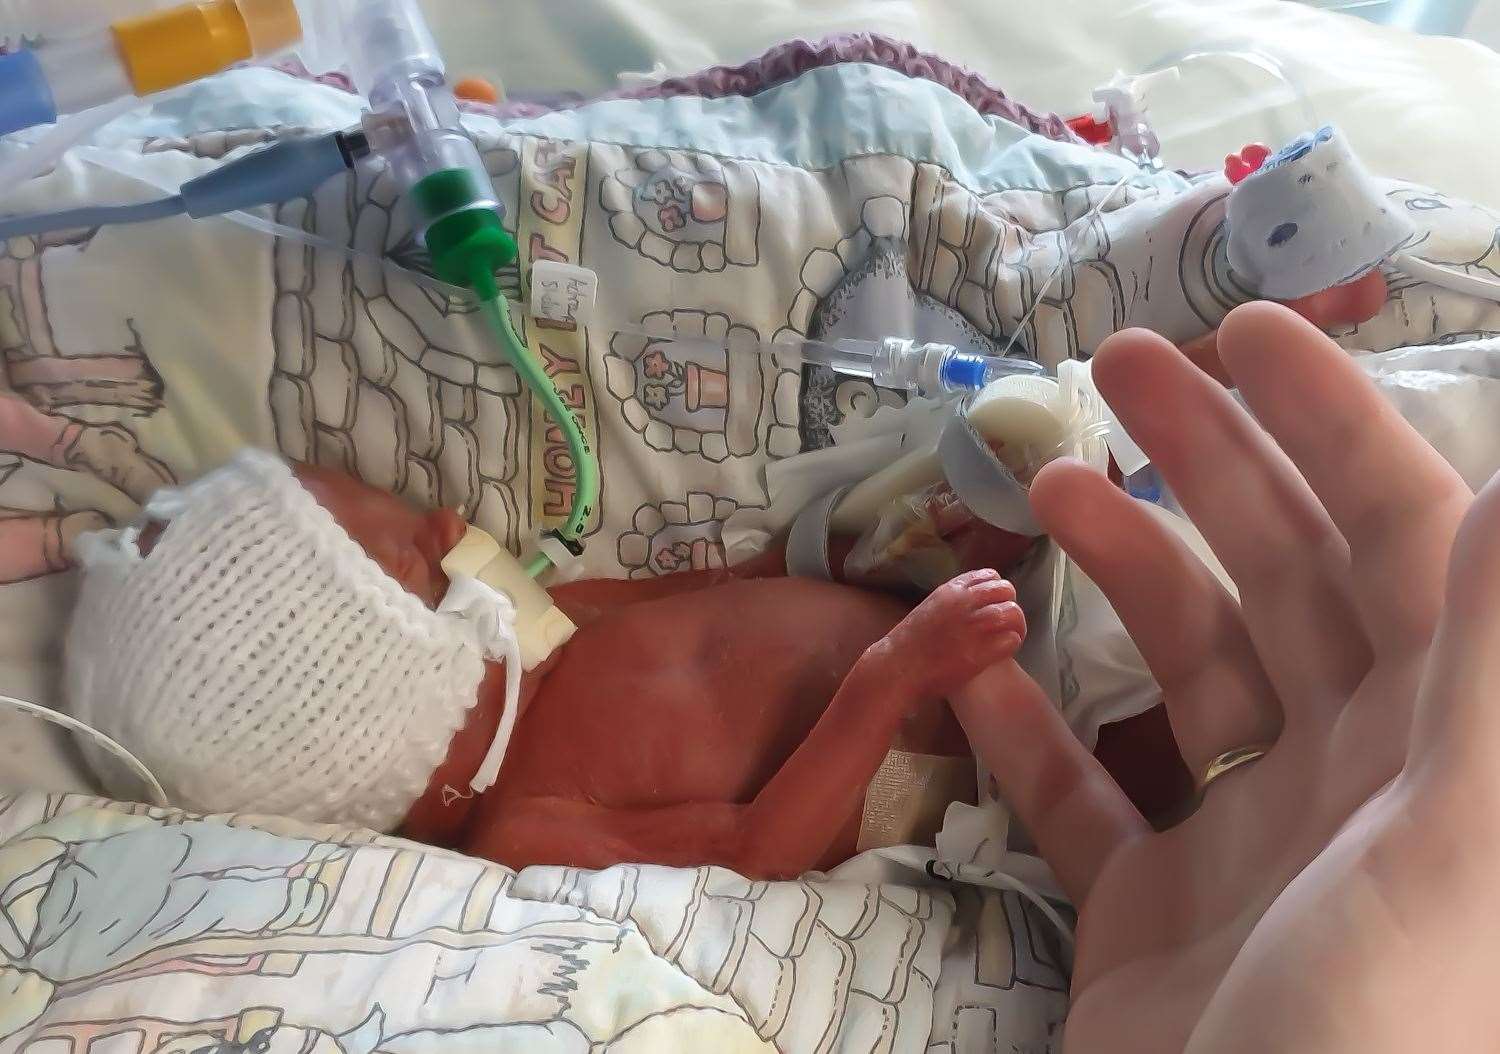 Oliver-Cash was born prematurely at Medway Hospital last year